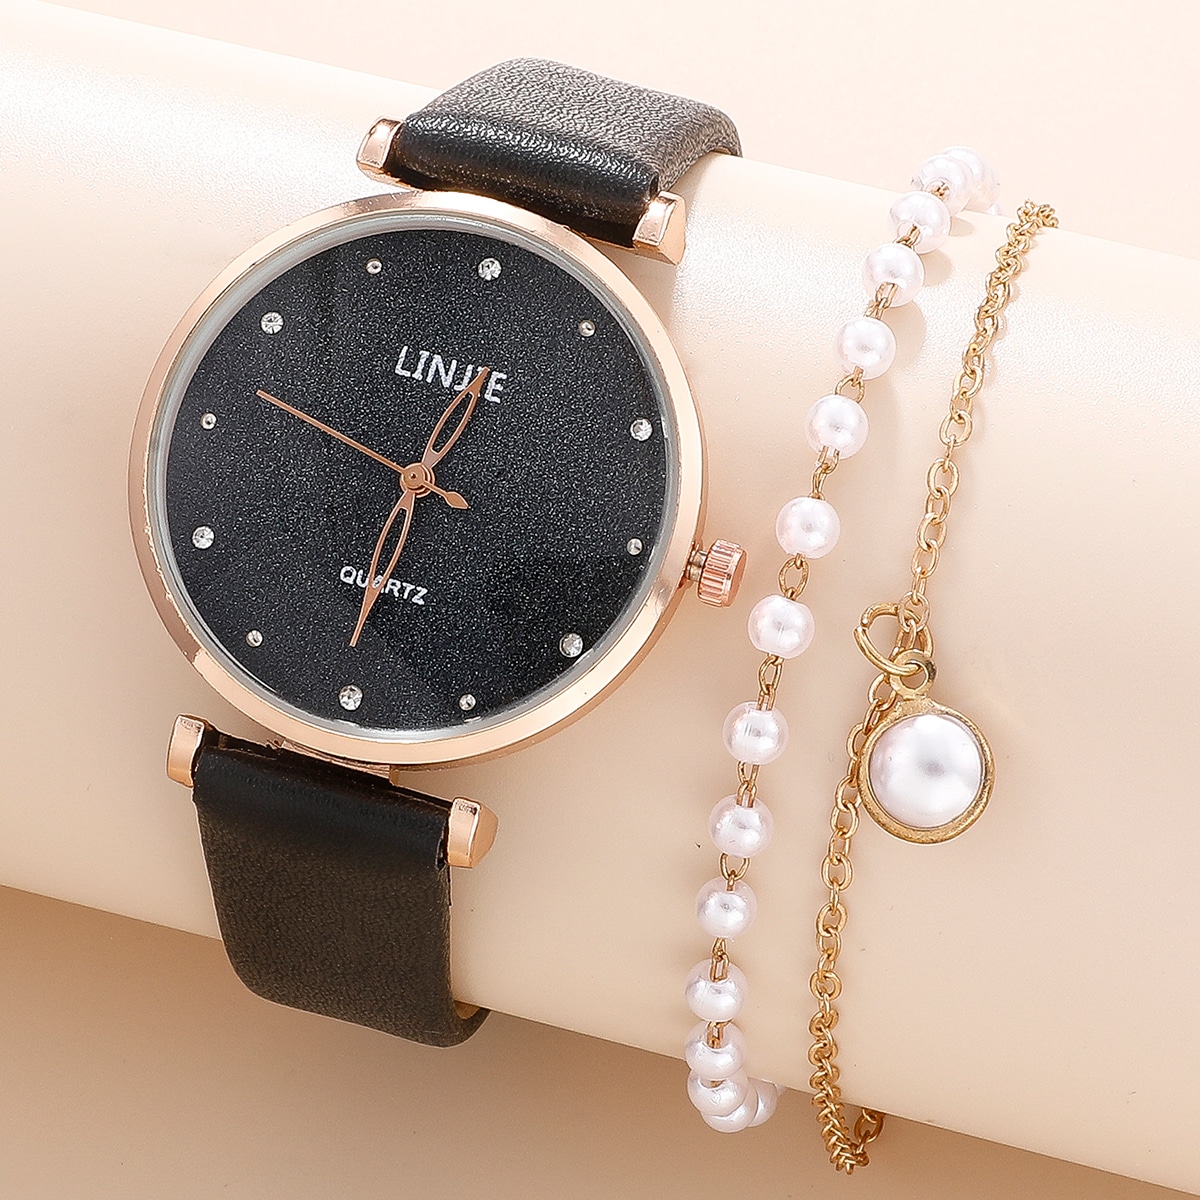 2pcs-women-s-watches-set-female-clock-luxury-brand-design-women-watches-simple-fashion-ladies-watches-3